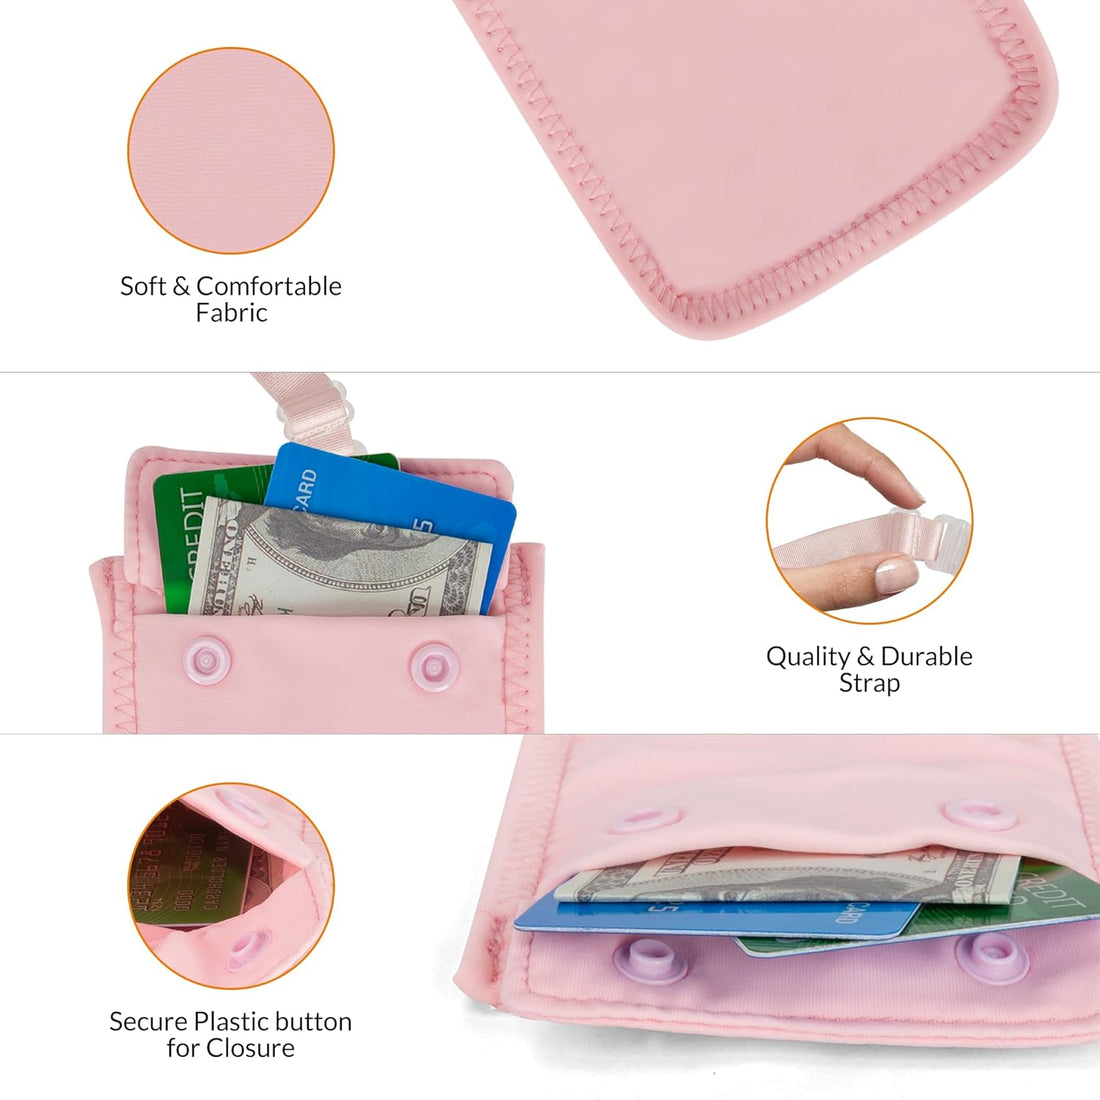 Boxiki Travel Hidden Money Belt for Men & Women - RFID Blocking Waist Pack for Passport, Wallet & Phone - Safe and Secure for Travel, Hidden Bra Wallet (Pink), 4x5.4 inches, Flat Profile